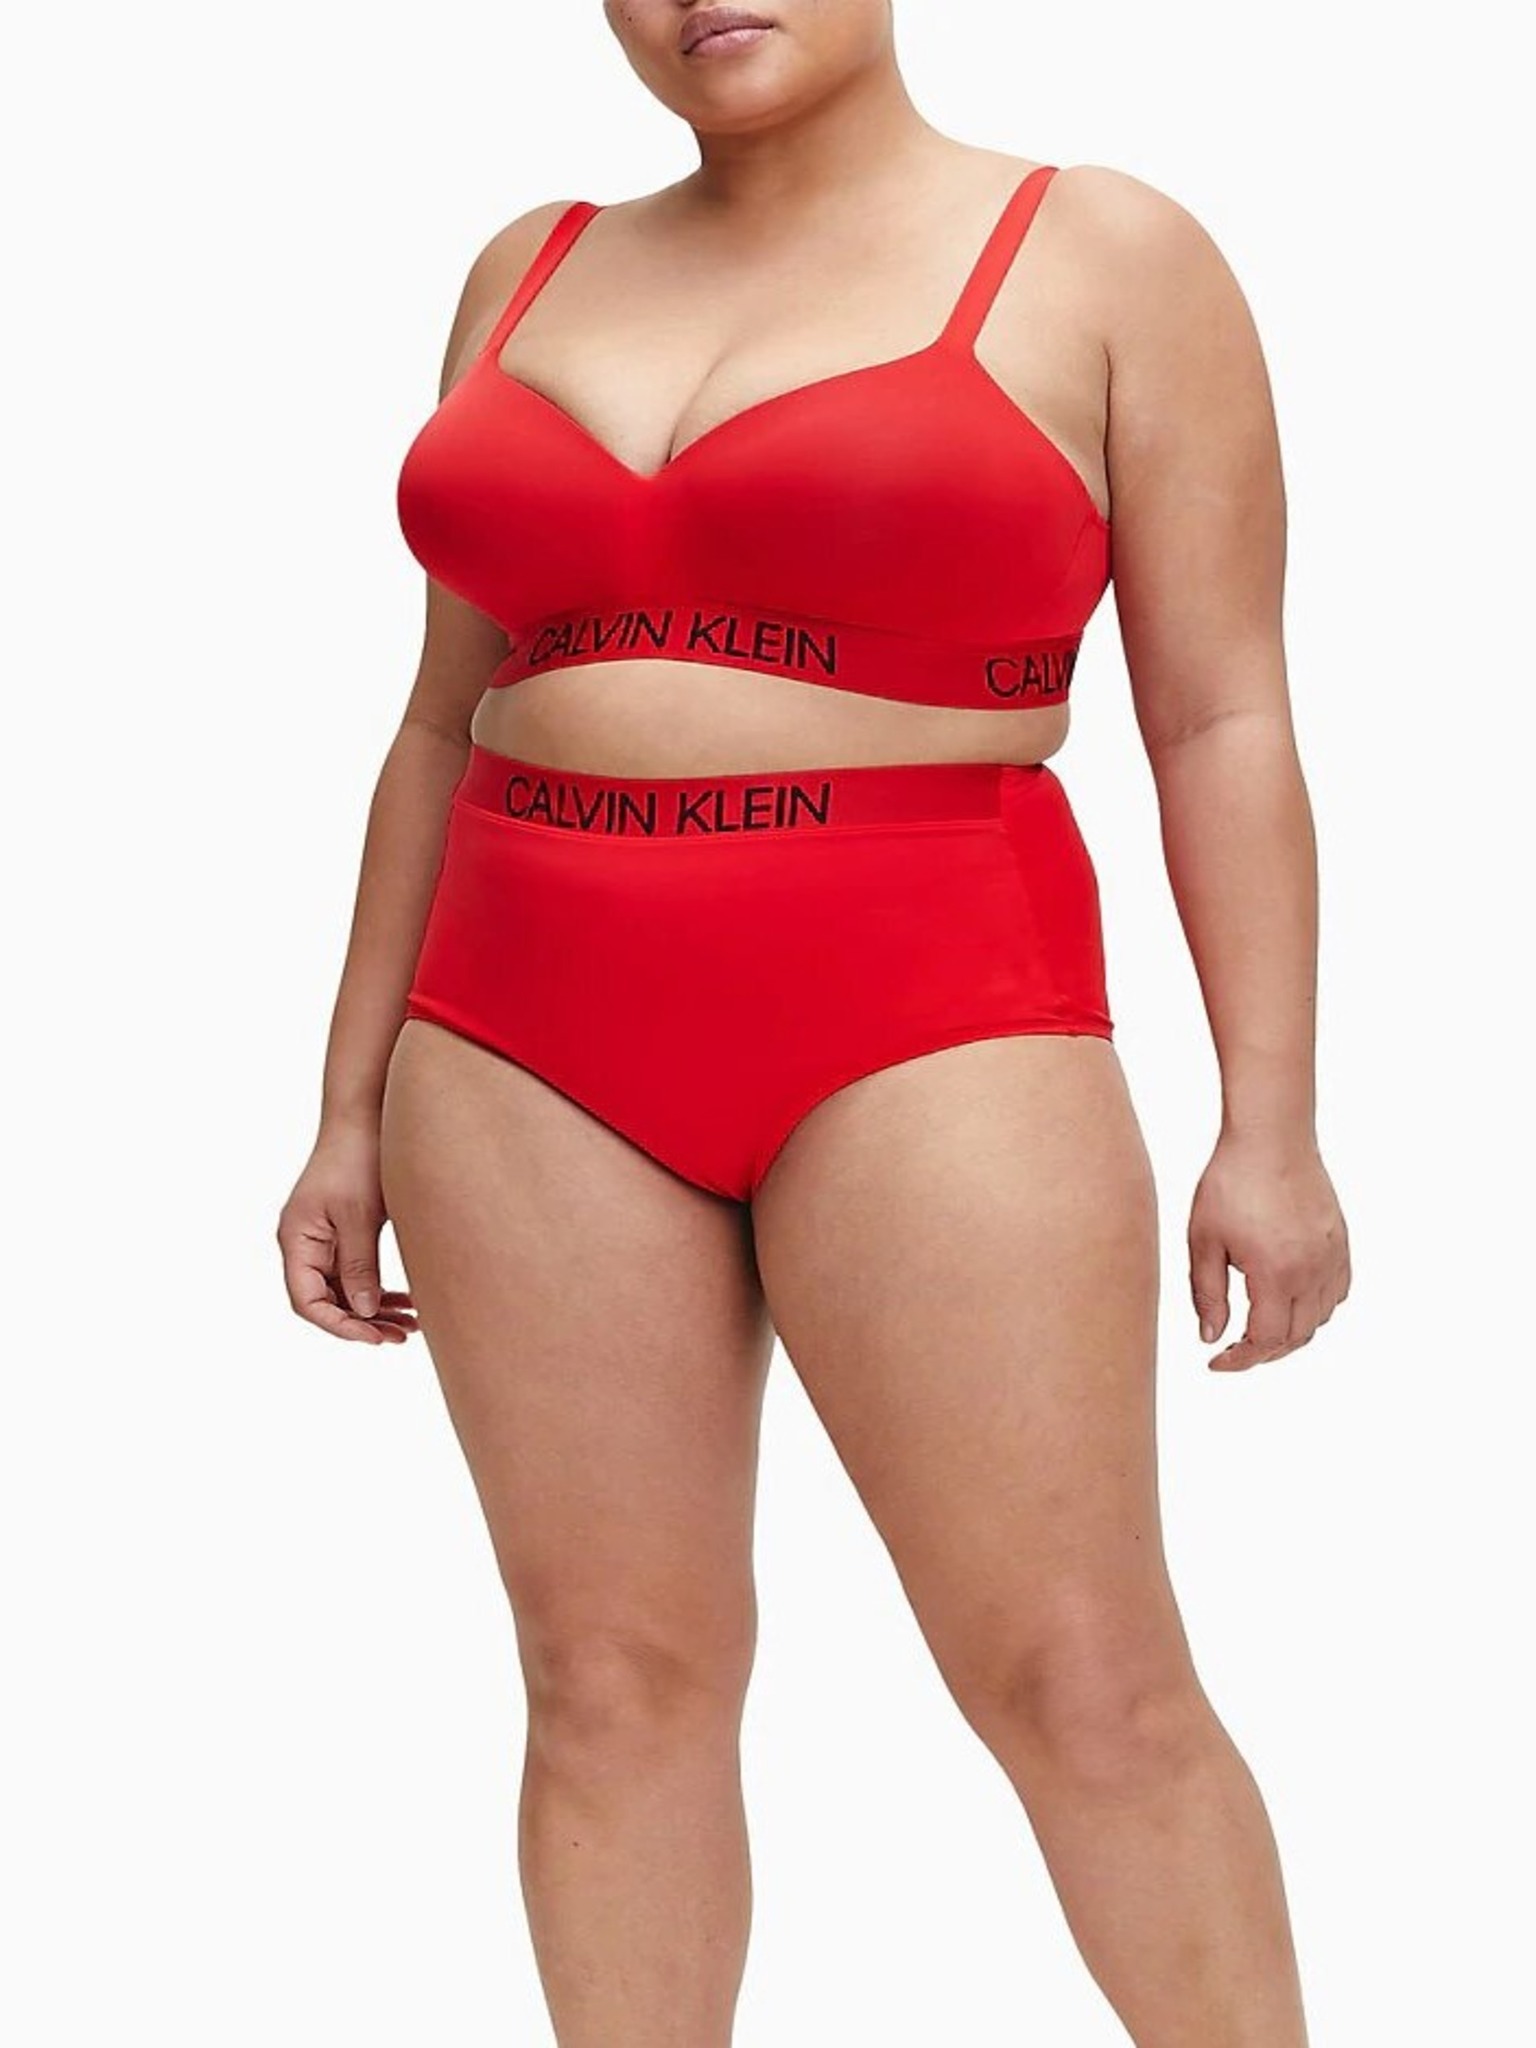 Calvin Klein - Demi Bralette Plus Size High Risk Red Bikini top